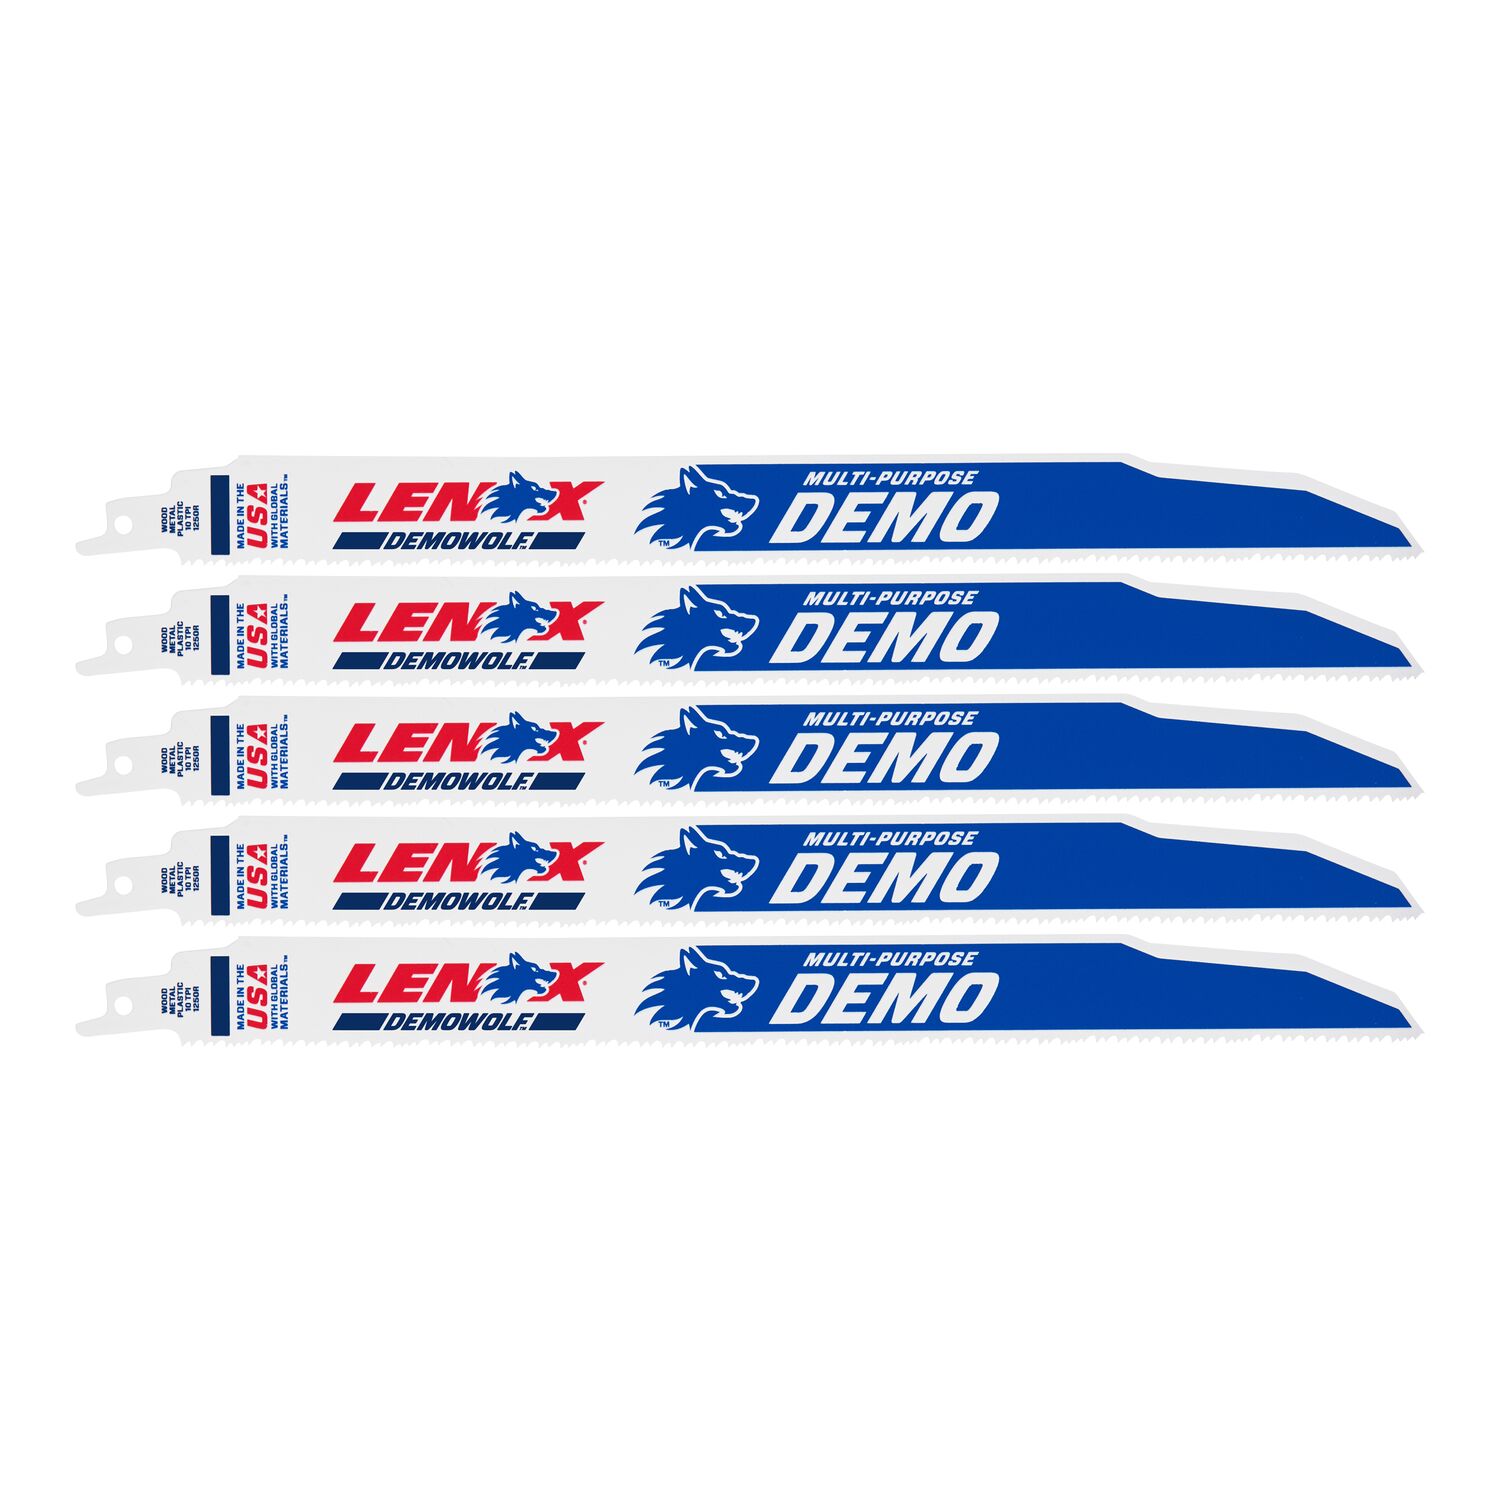 LENOX DEMOWOLF 12 in. Bi-Metal WAVE EDGE Reciprocating Saw Blade 10 TPI 5 pk -  LXAR1250R